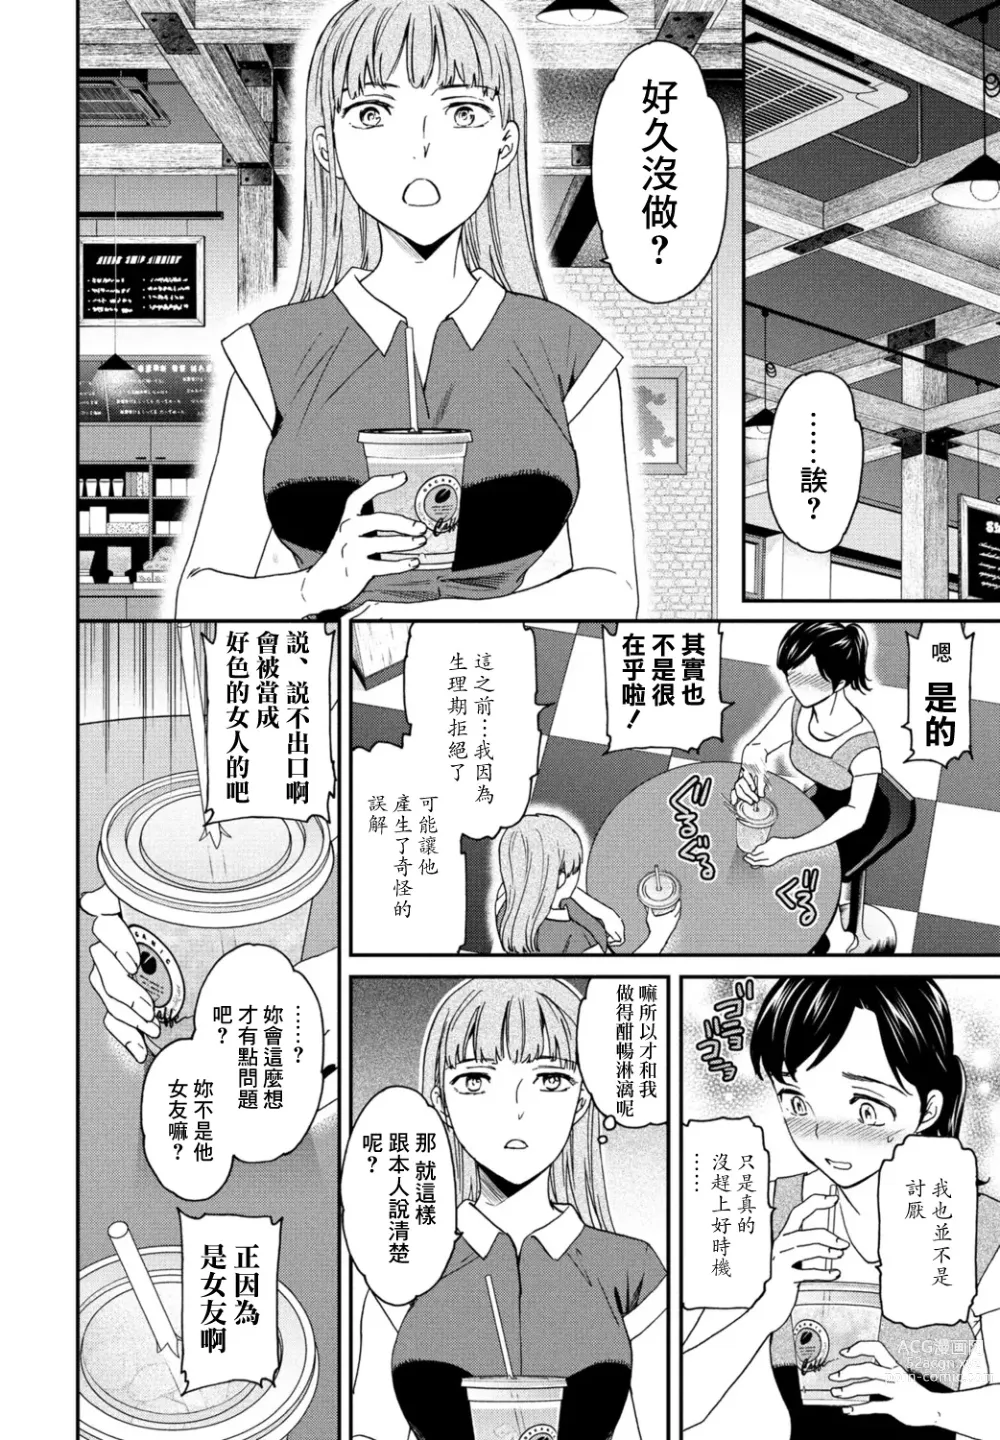 Page 22 of manga Lose